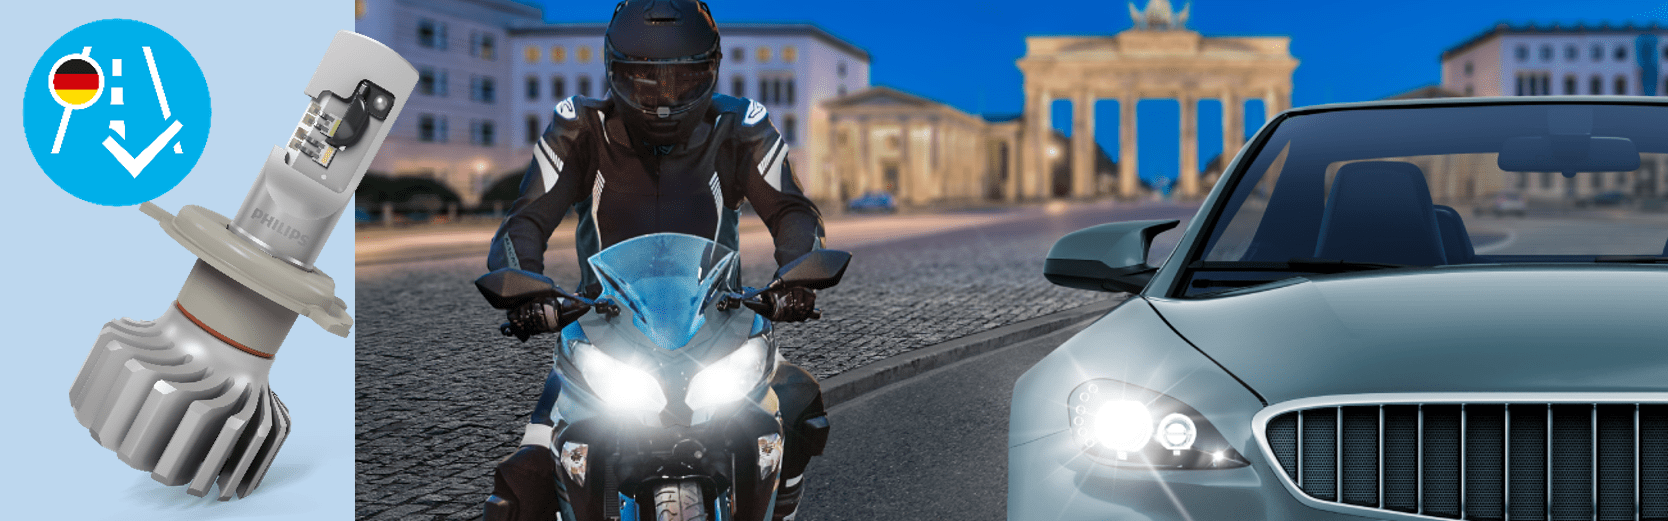 H4 LED Motorrad Lampe PHILIPS Straßenzulassung Ultinon Pro6000